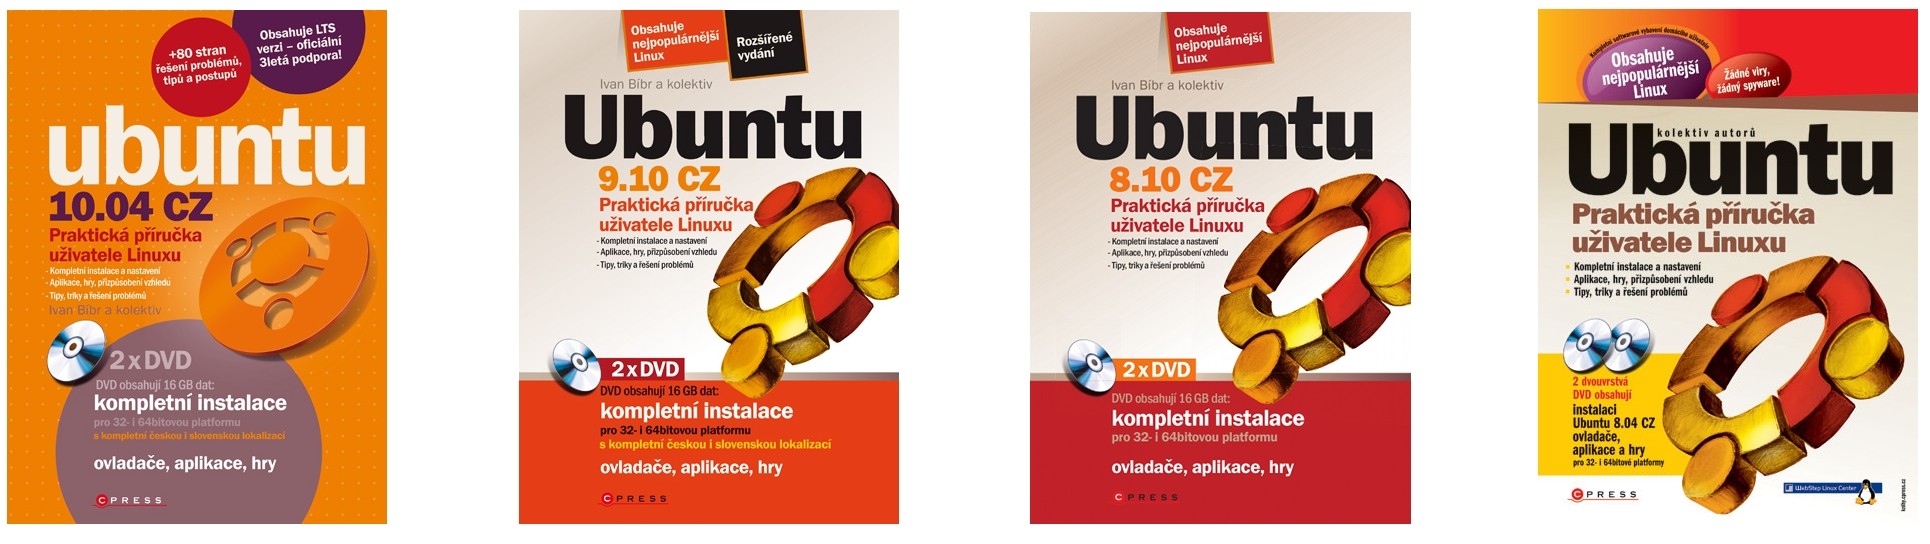 ubuntu-books.jpg